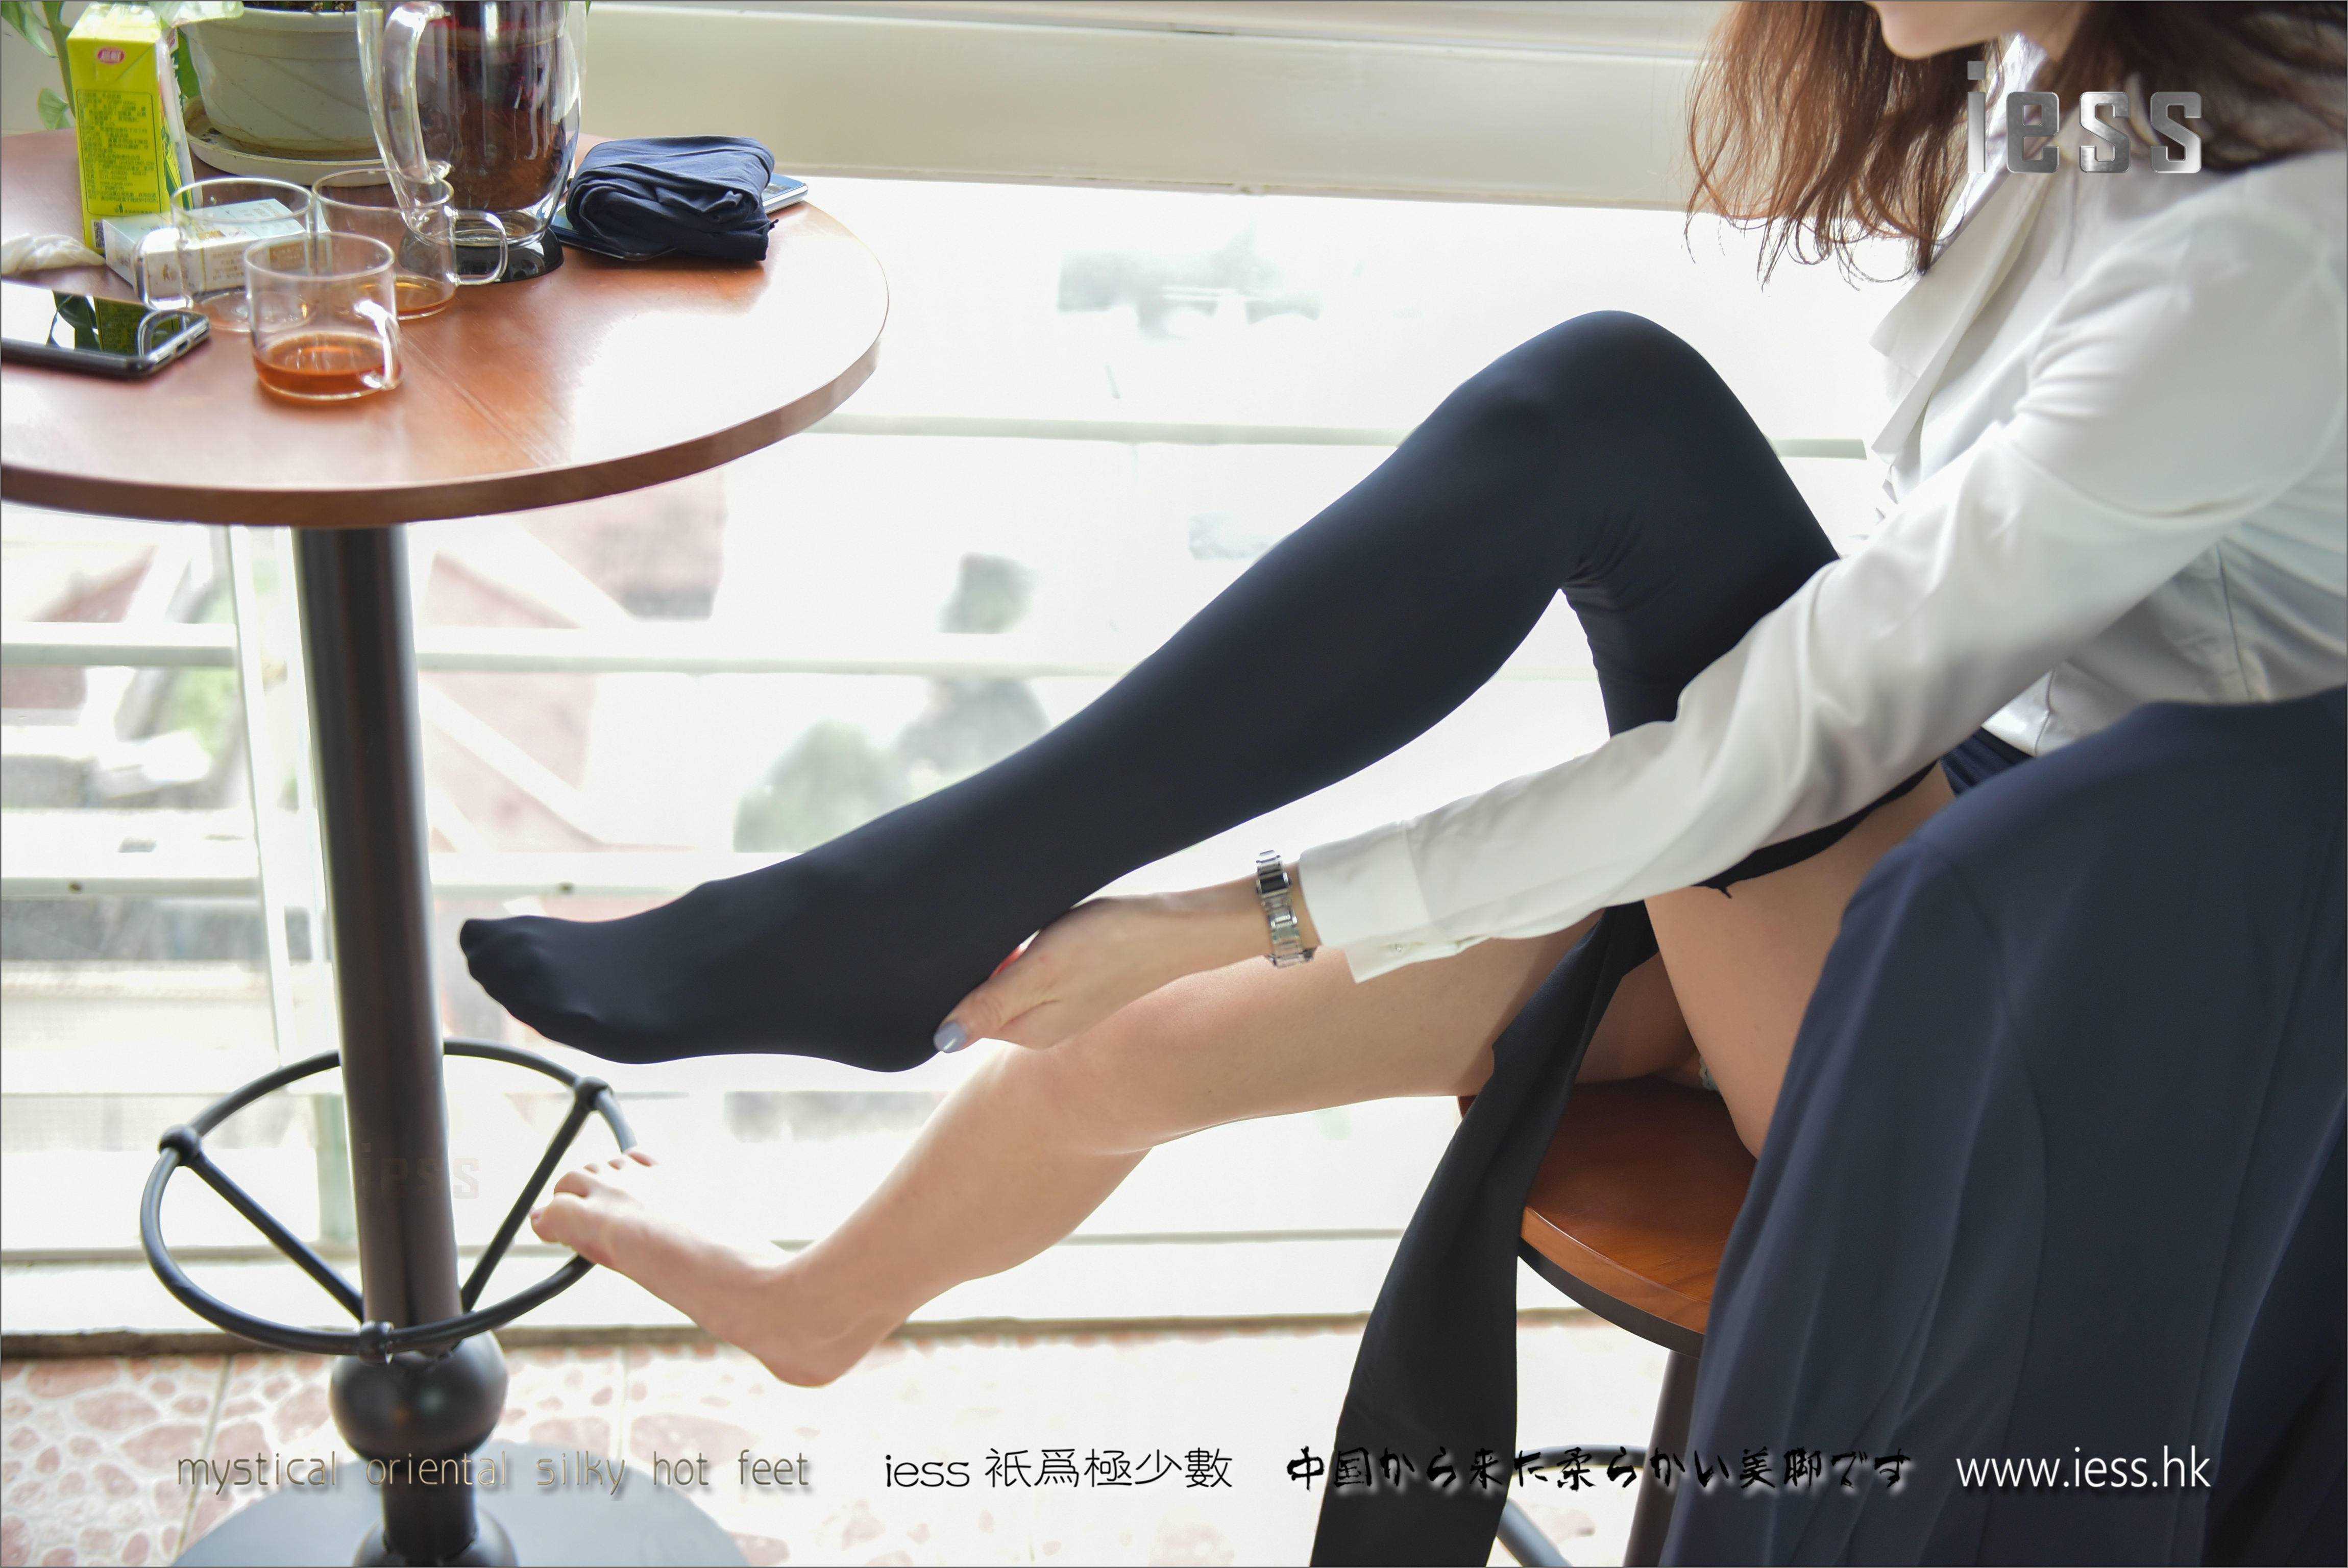 China Beauty Legs and feet 205